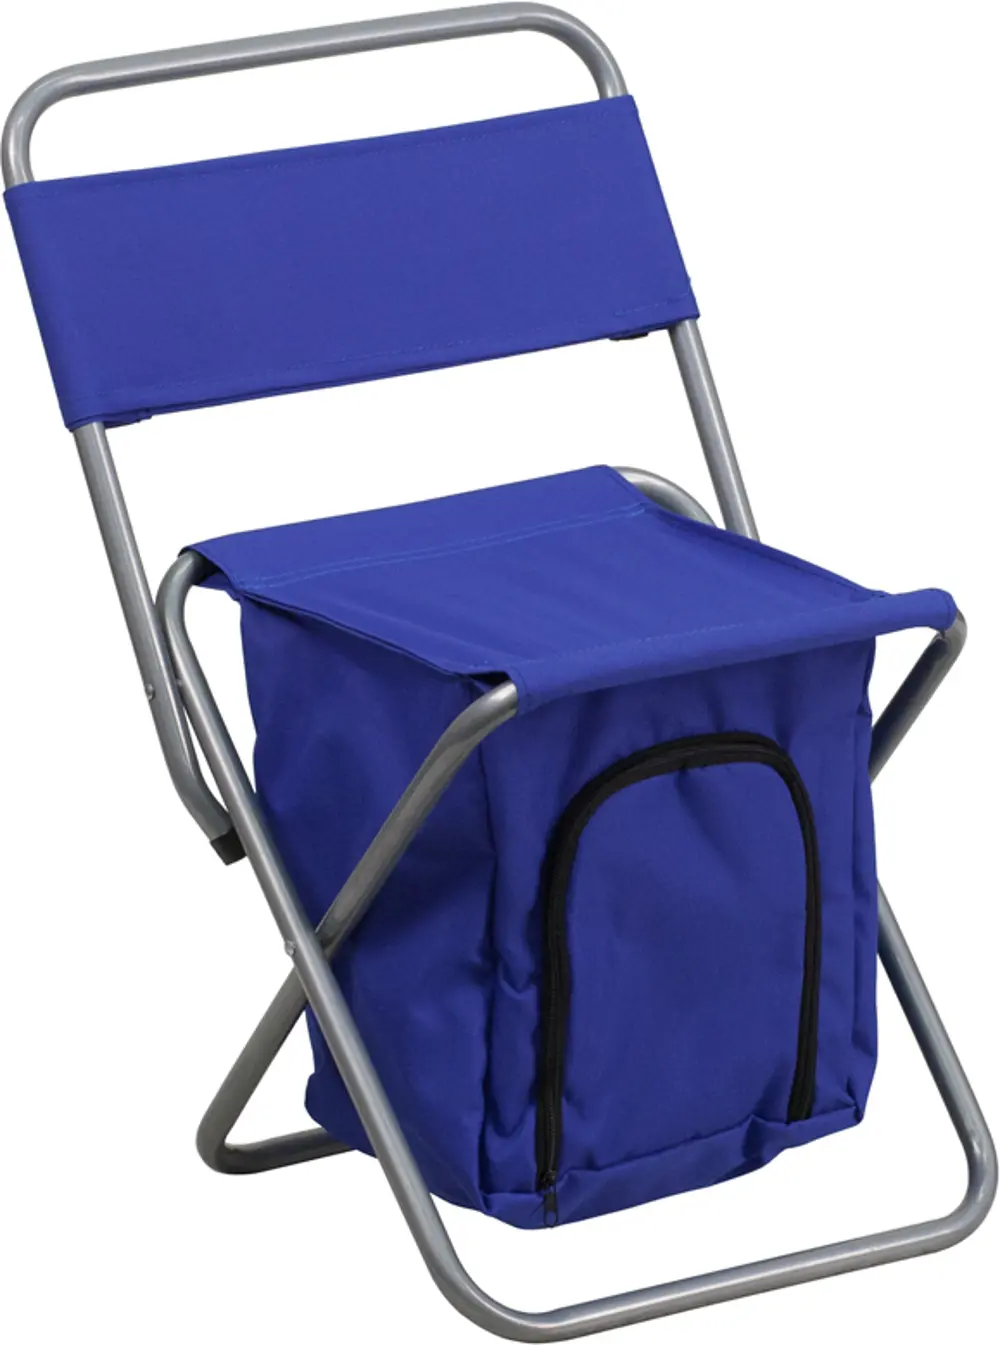 Kids Blue Folding Camping Chair-1